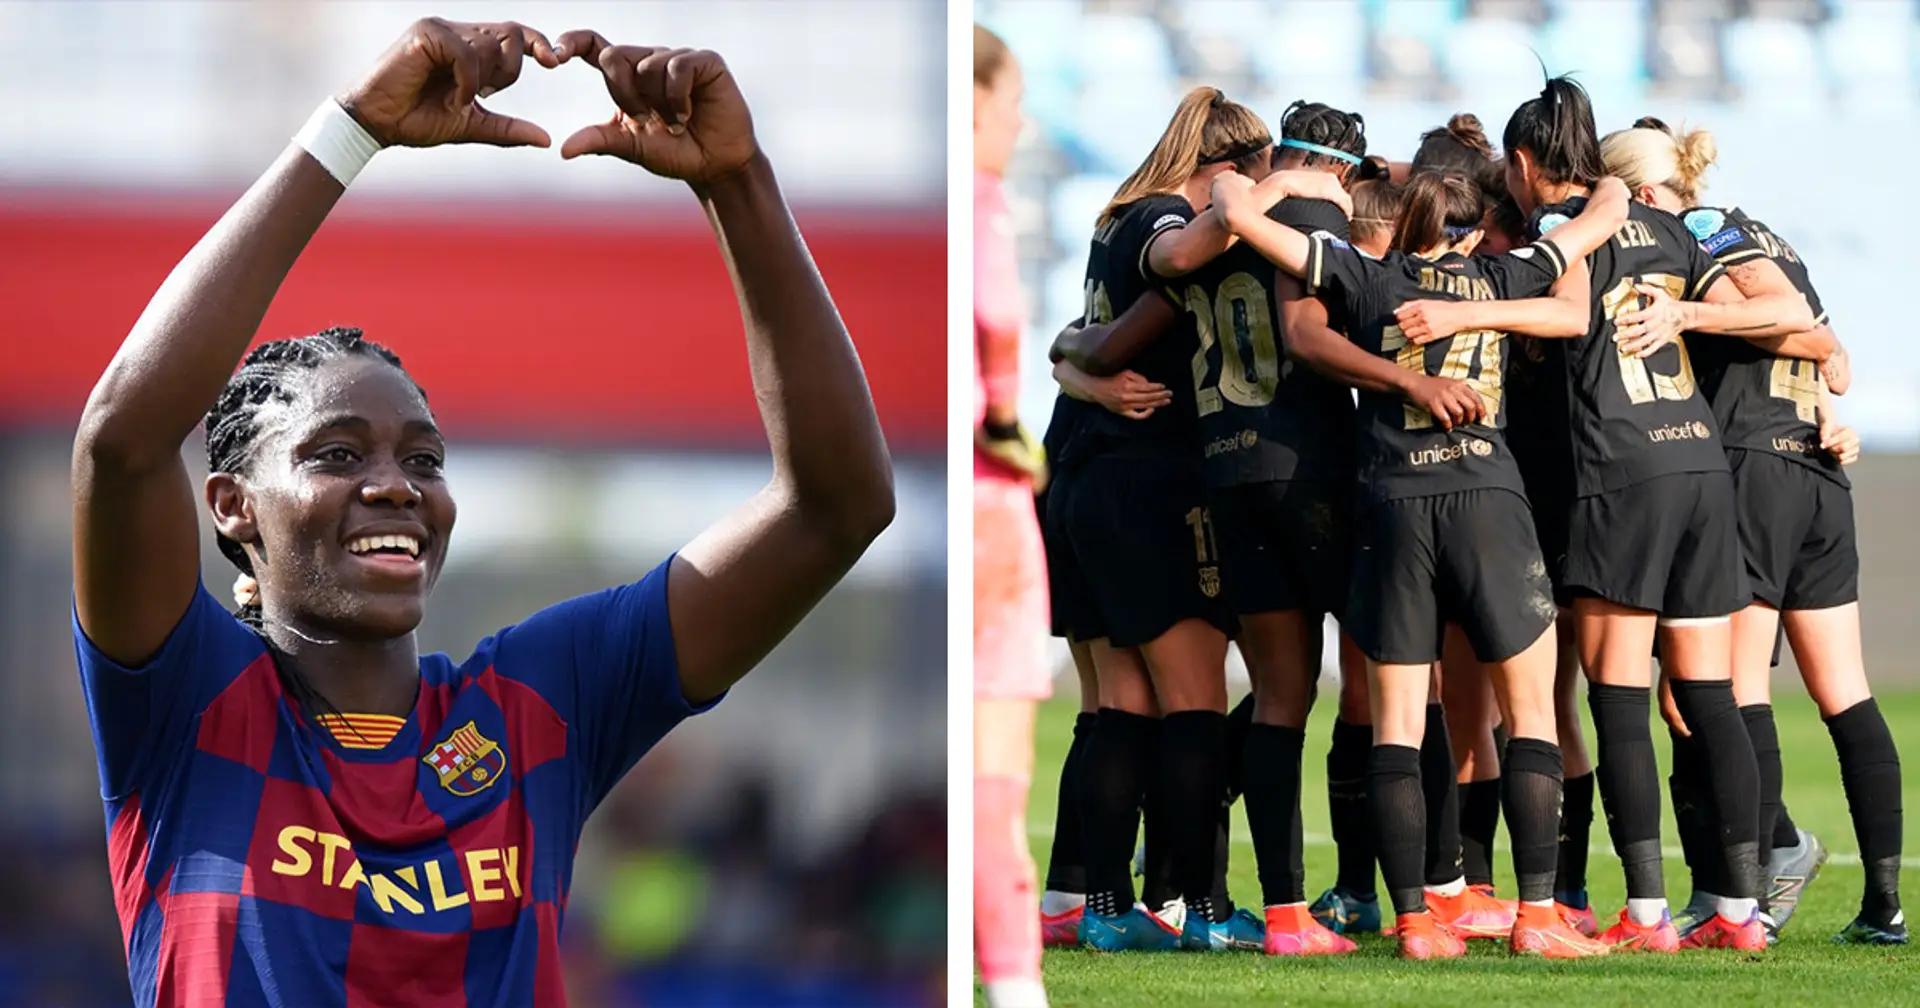 Barca Femeni beat Man City to advance to Champions League semifinals